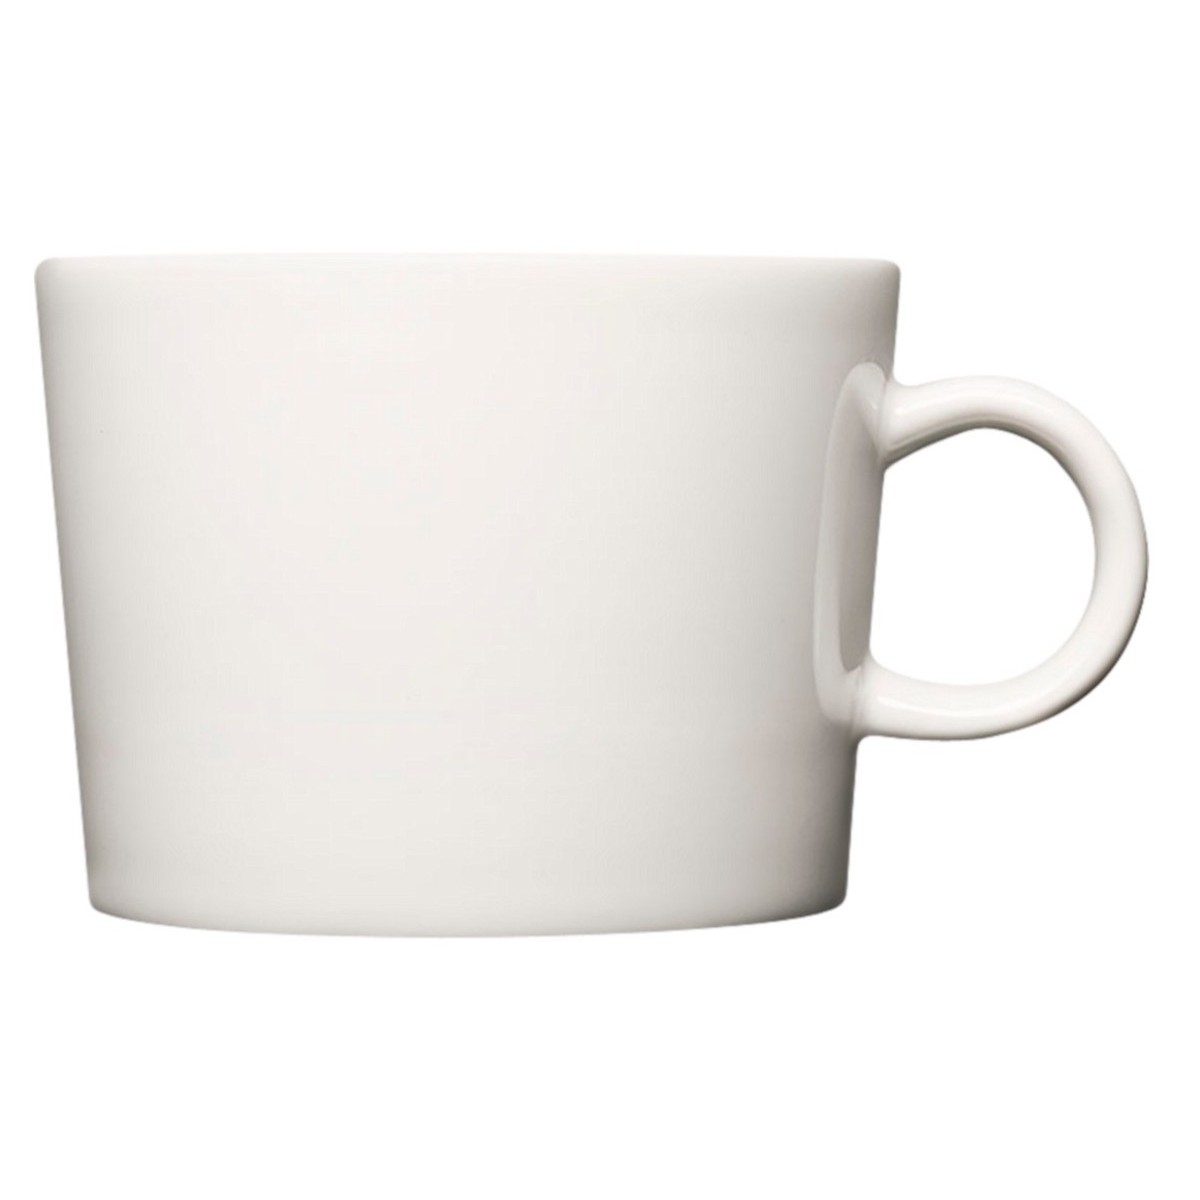 0.22l - Teema coffee cup - white - 1005482